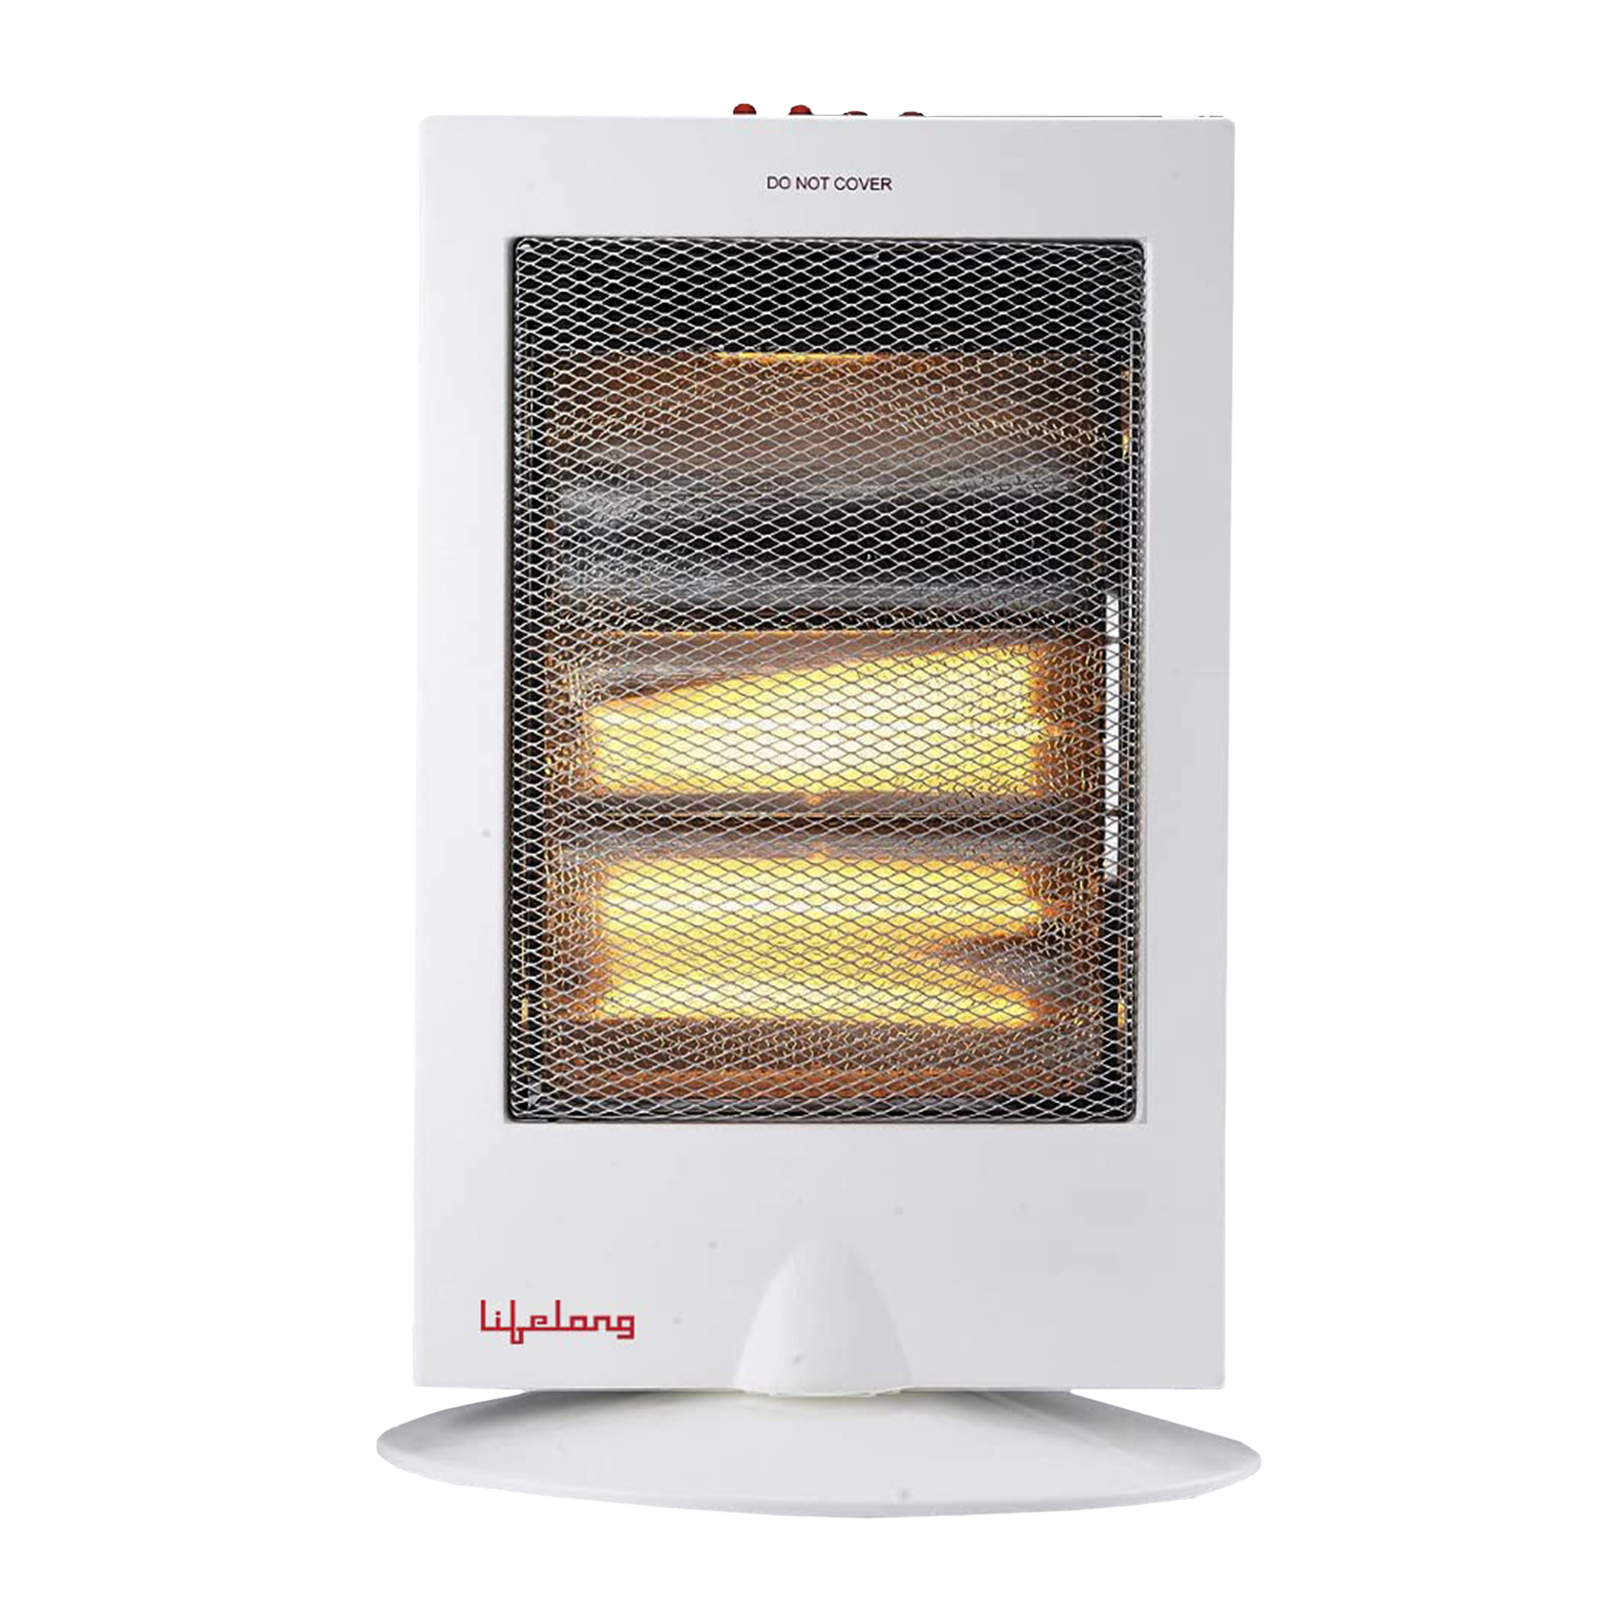 Lifelong 1200 Watts Halogen Room Heater (3 Power Settings, LLHH921, White)